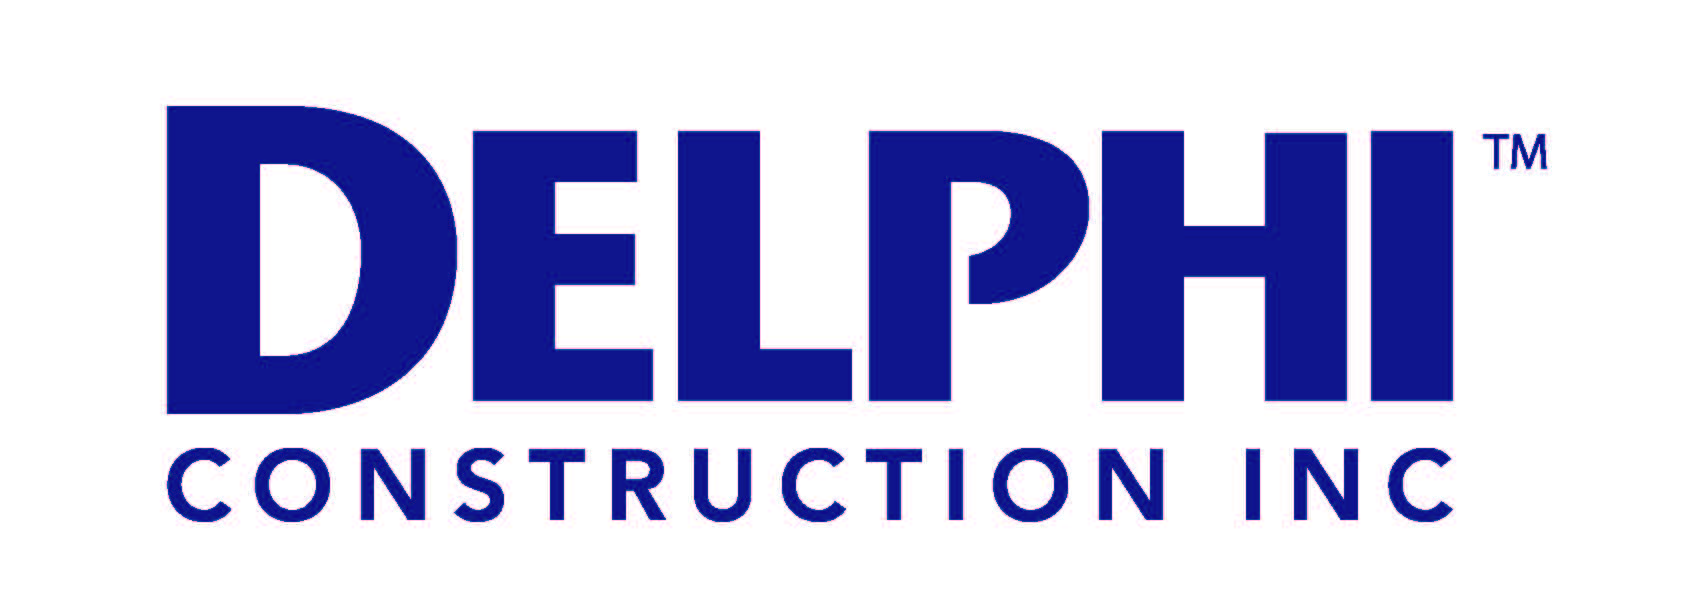 Delphi Construction INC company logo